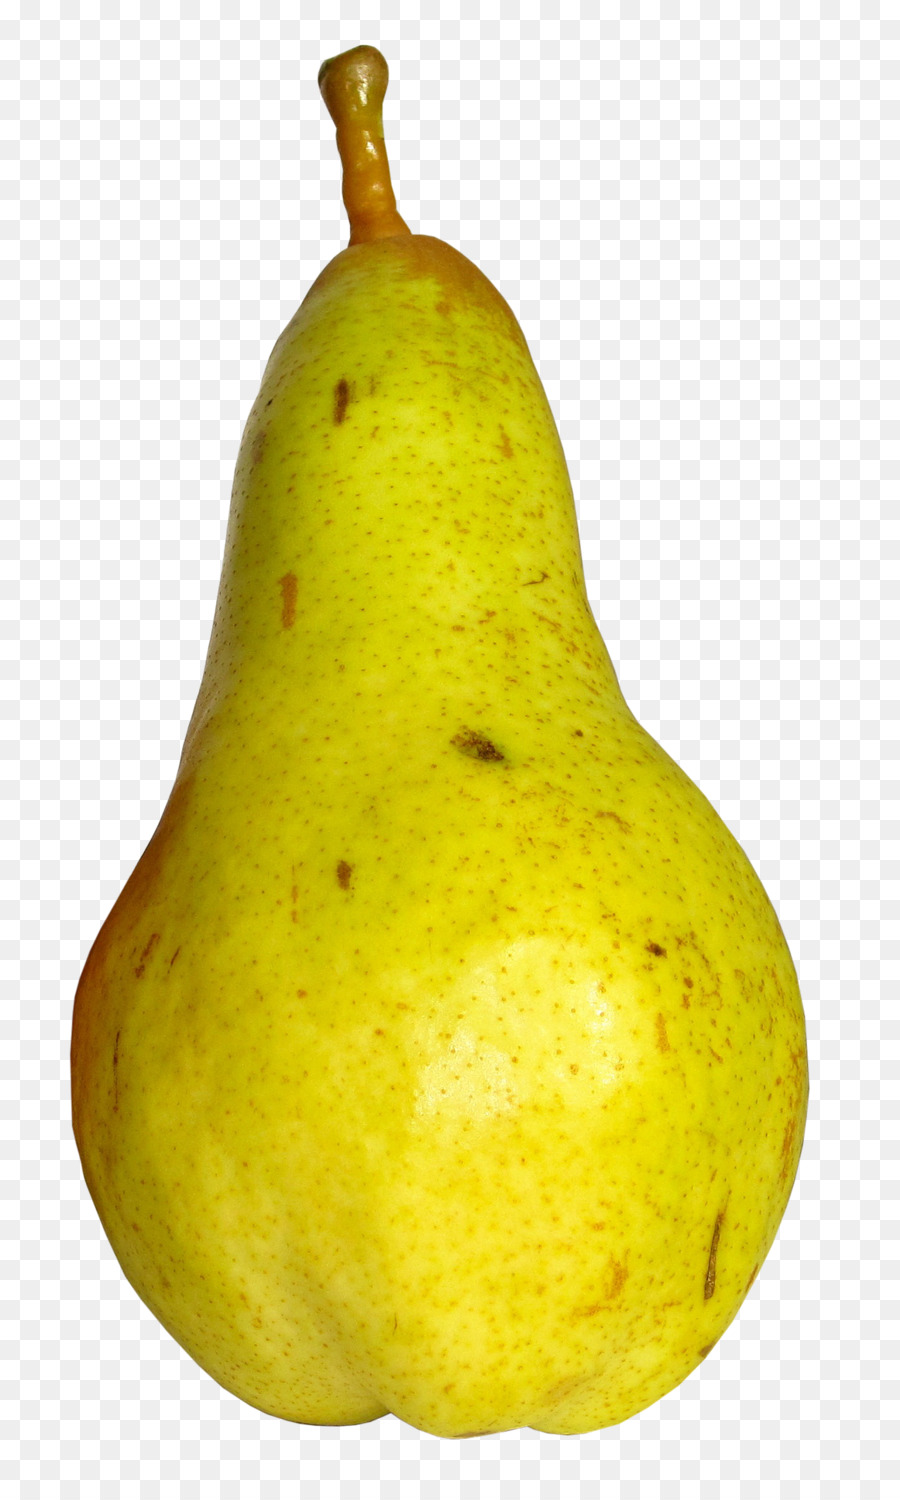 European pear Kiwifruit Food - pear png download - 1162*1920 - Free Transparent Pear png Download.